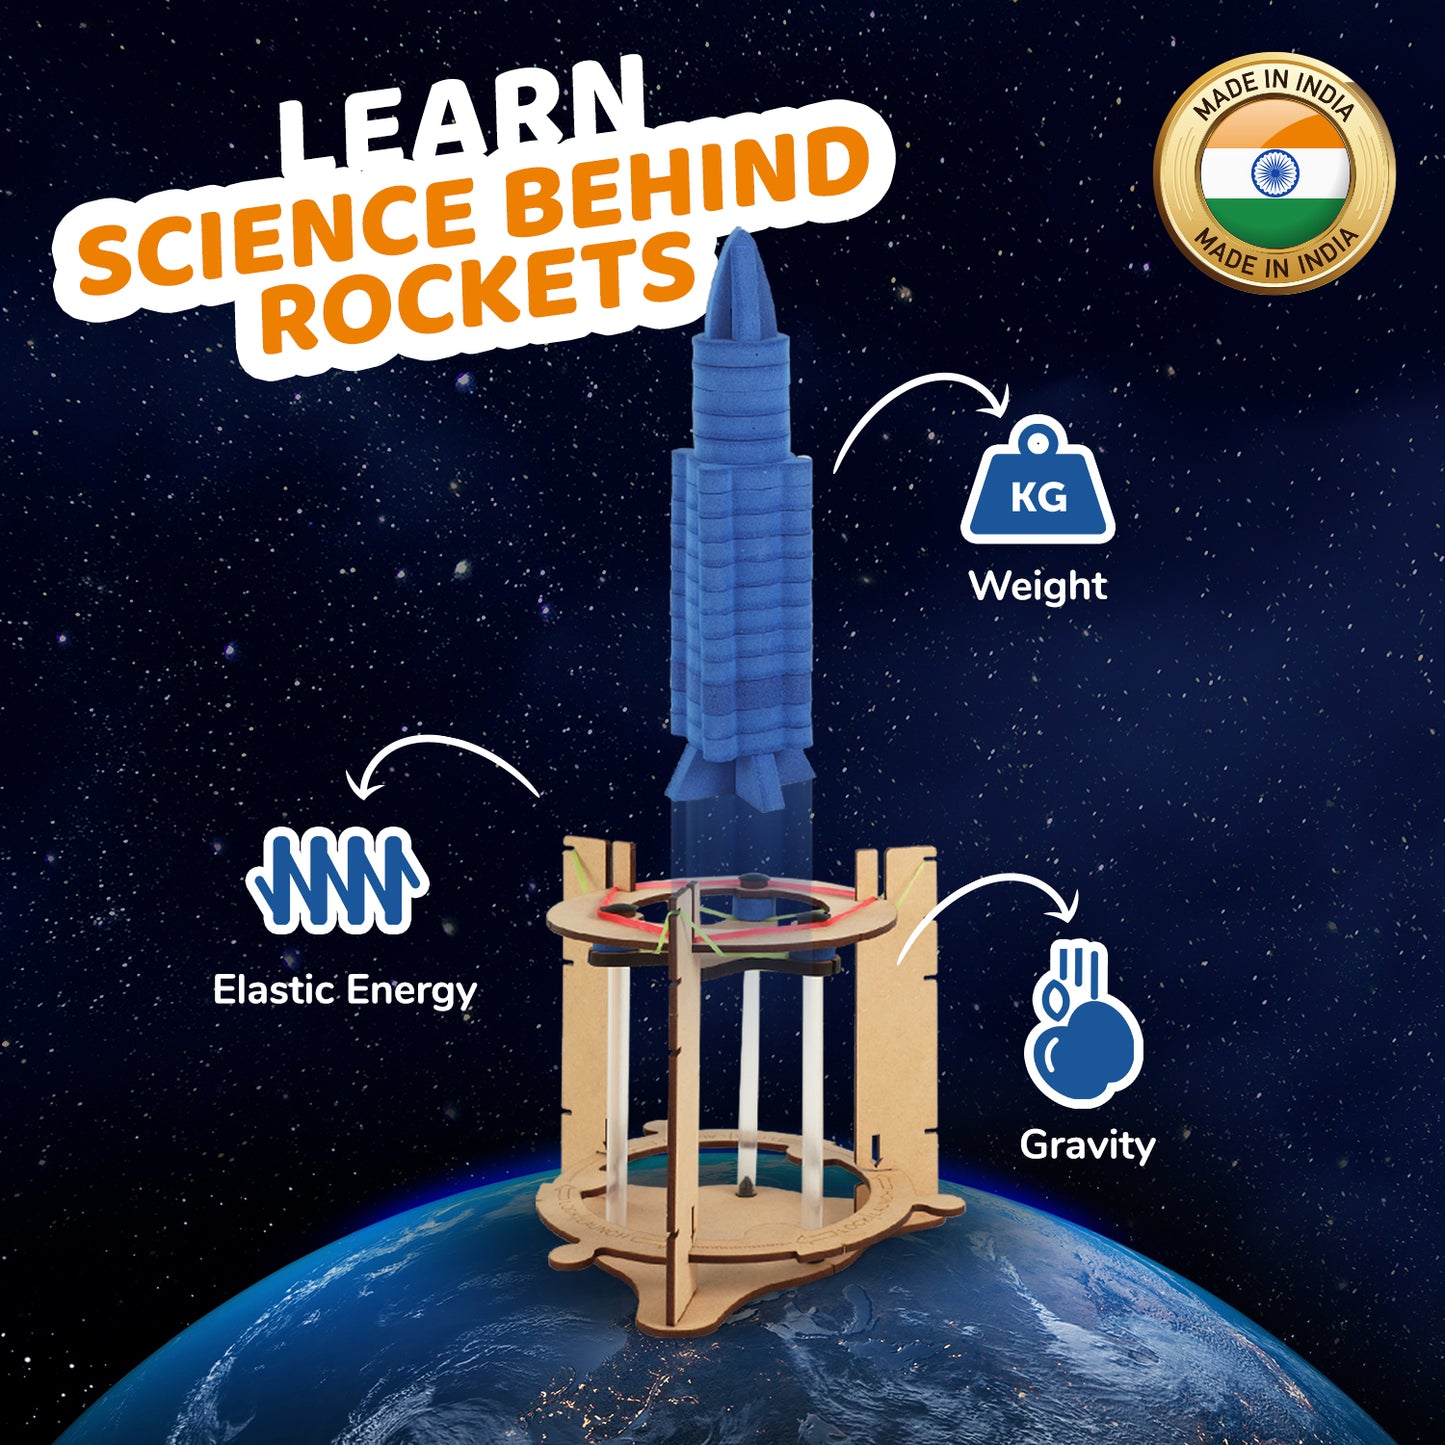 Smartivity Blast-Off Space Rocket 太空火箭發射器 DIY STEAM Model